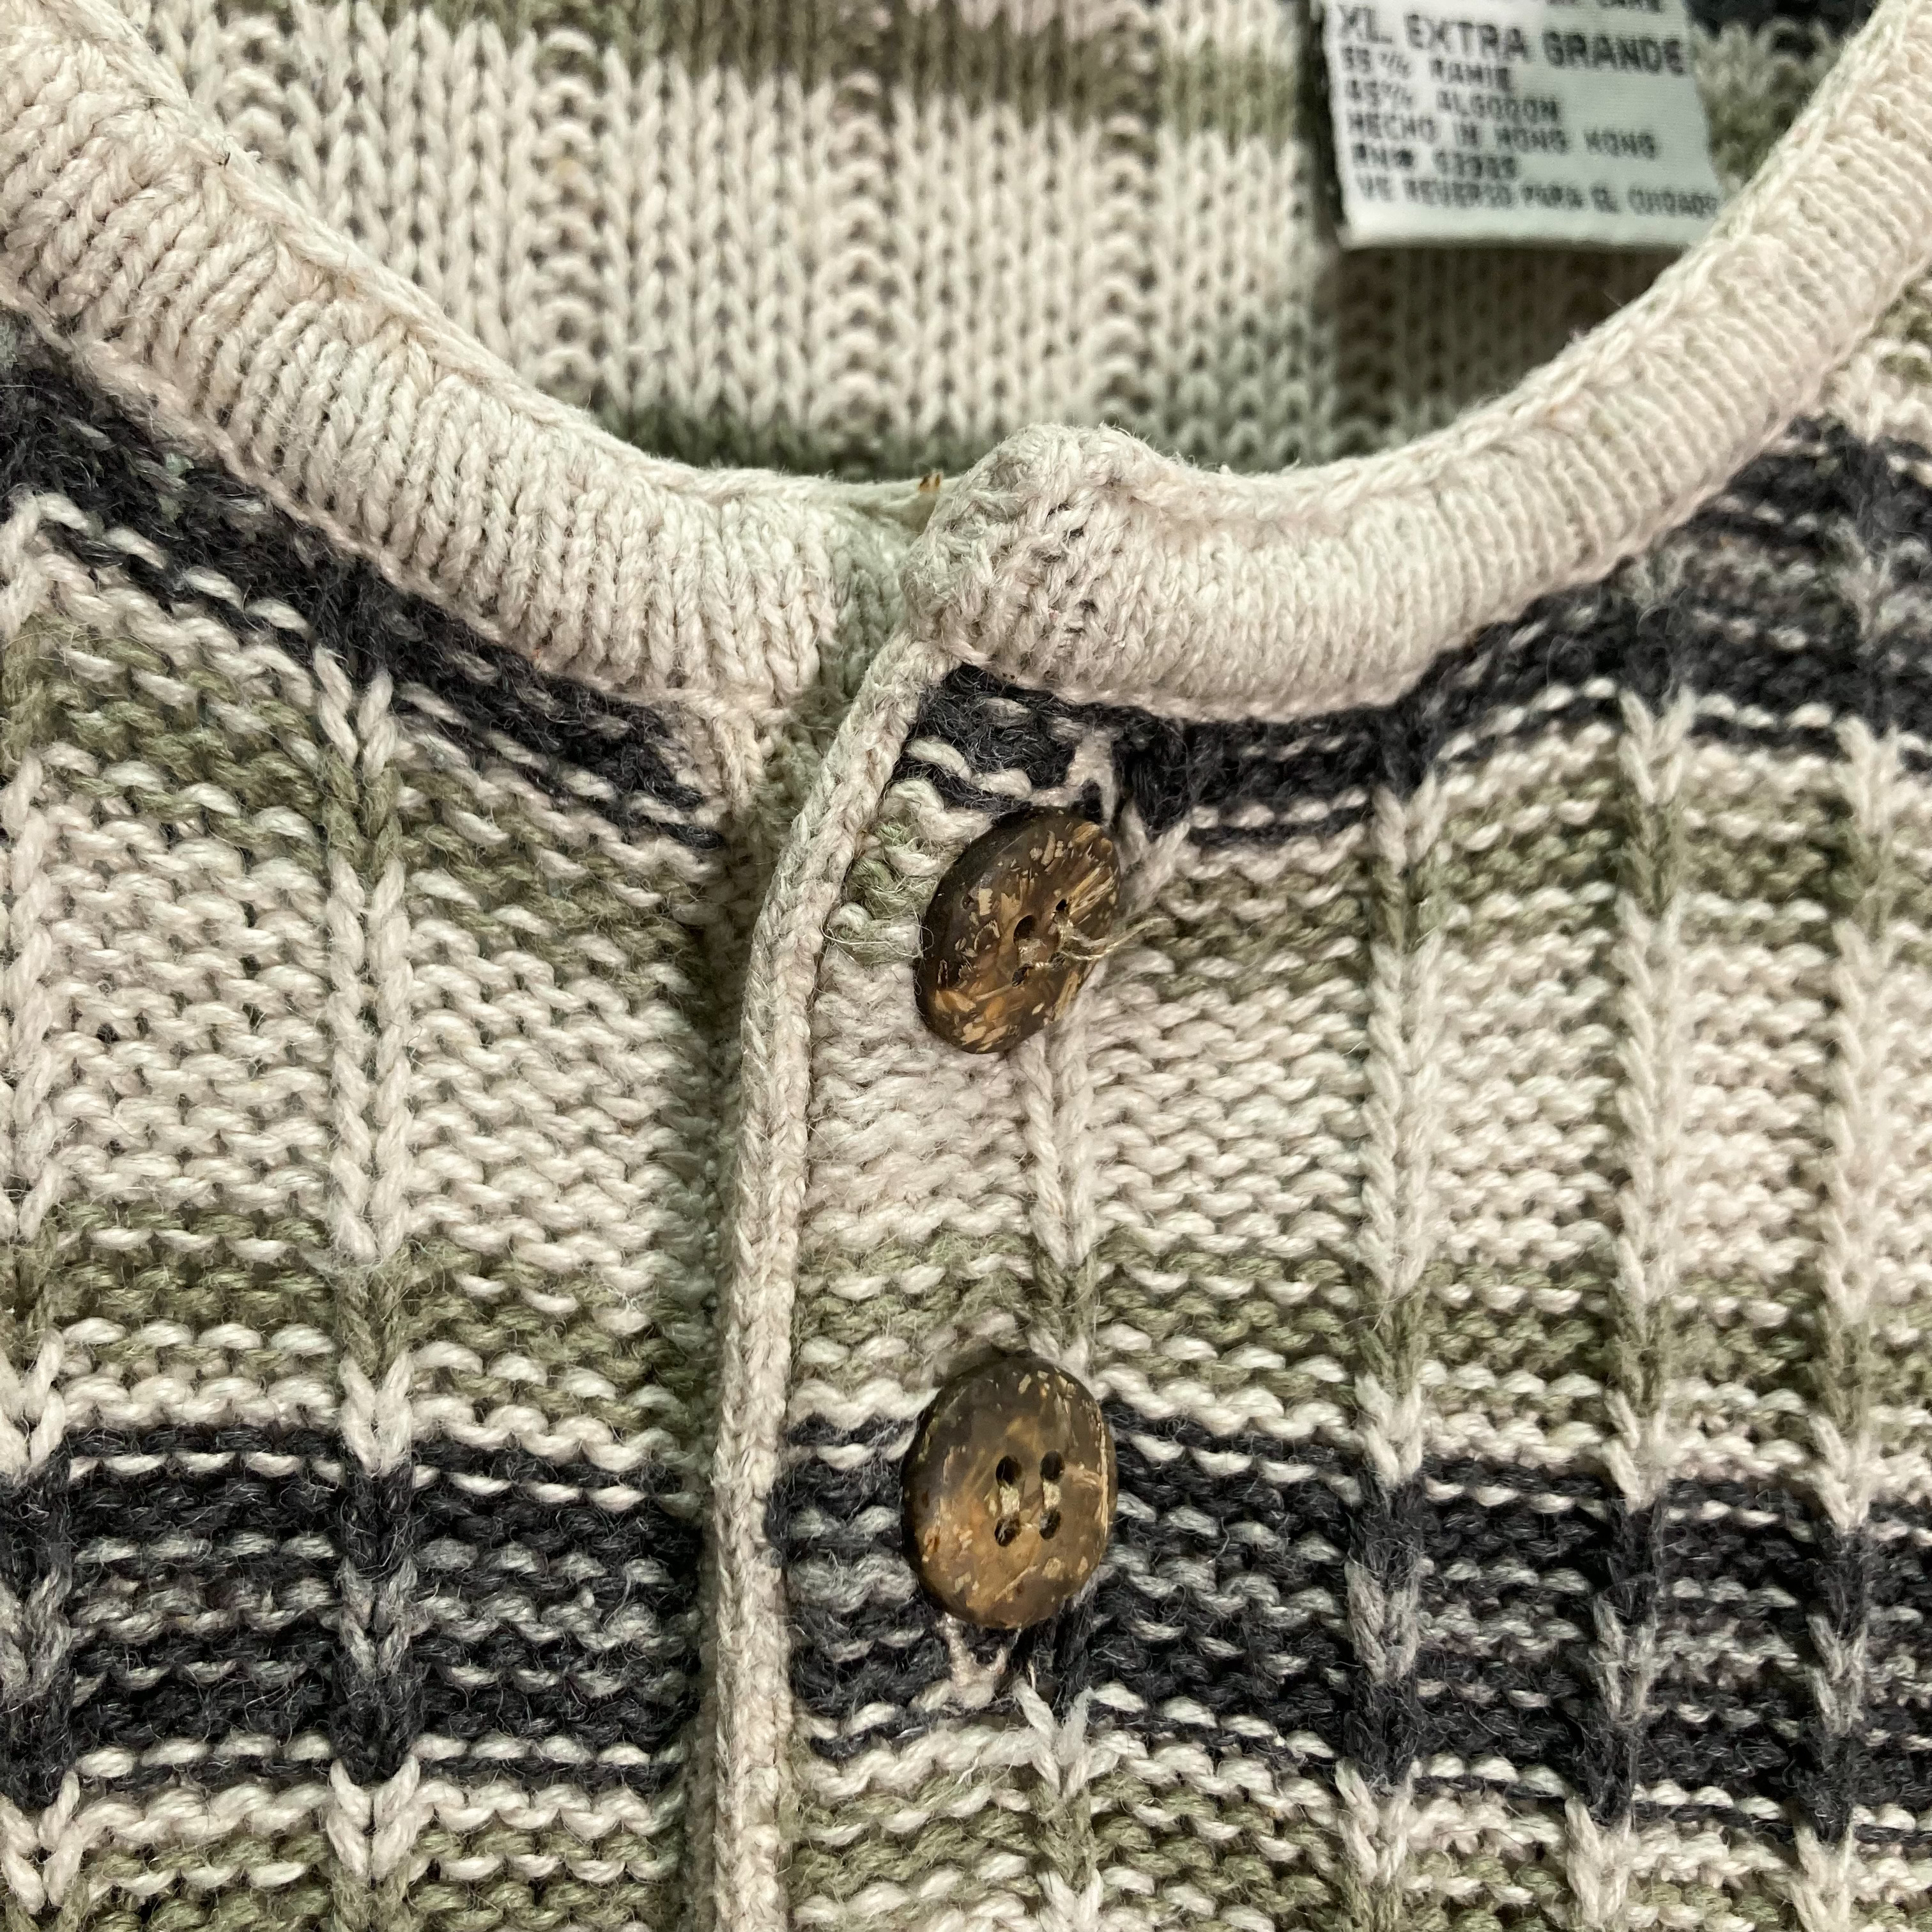 90s Henry-neck design cotton knit sweate